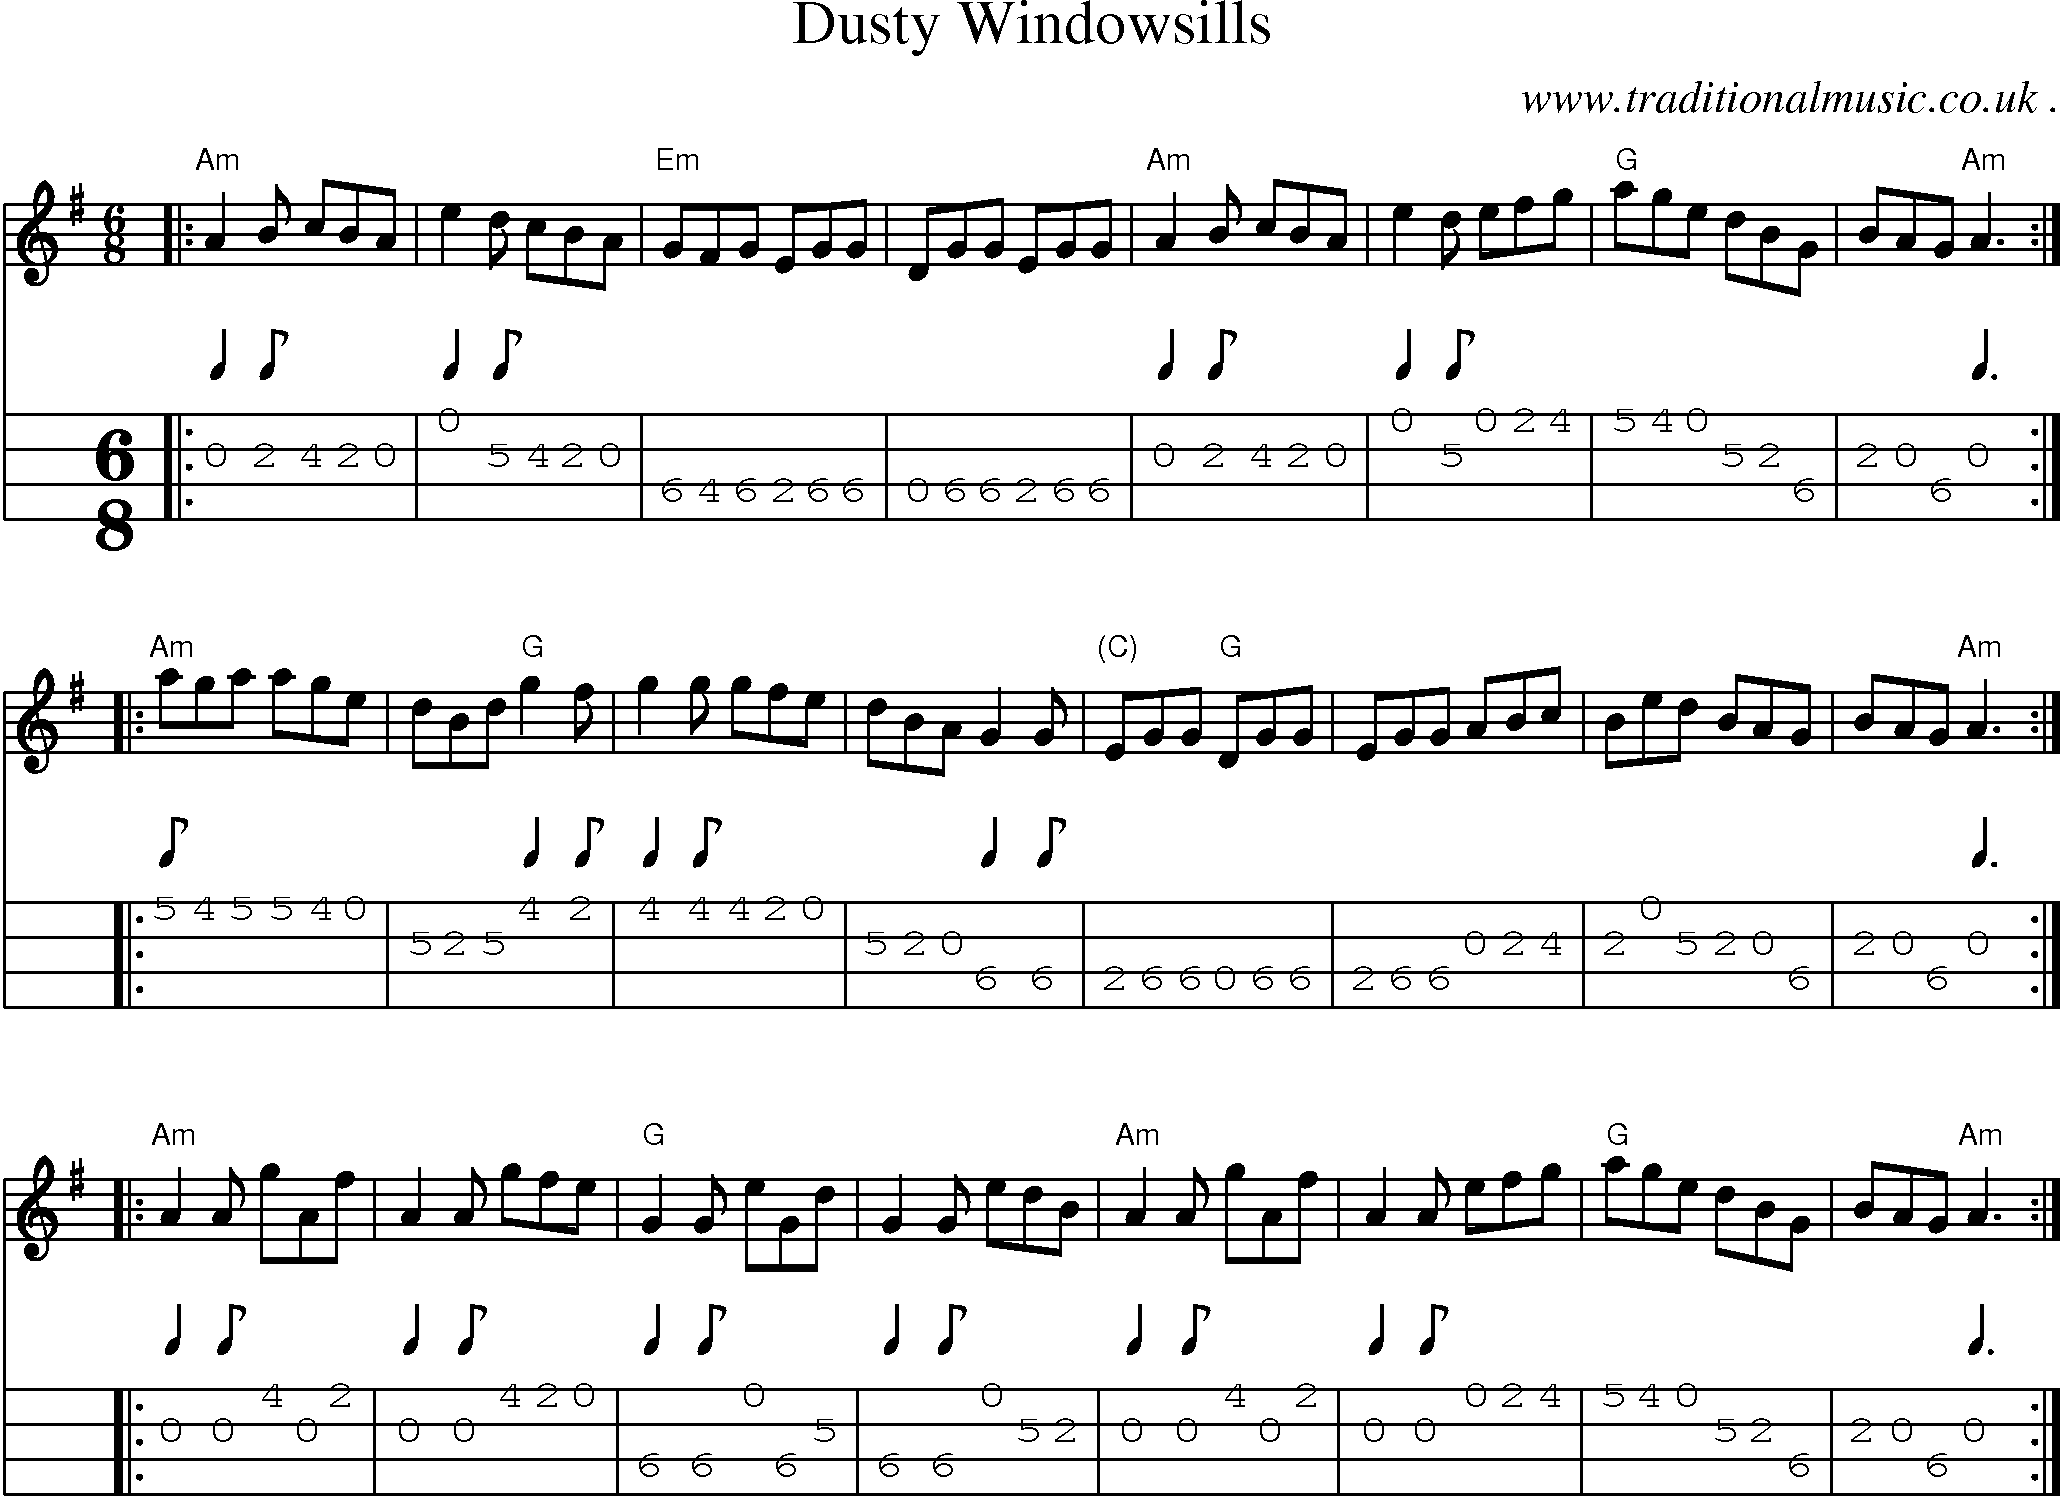 Sheet-music  score, Chords and Mandolin Tabs for Dusty Windowsills